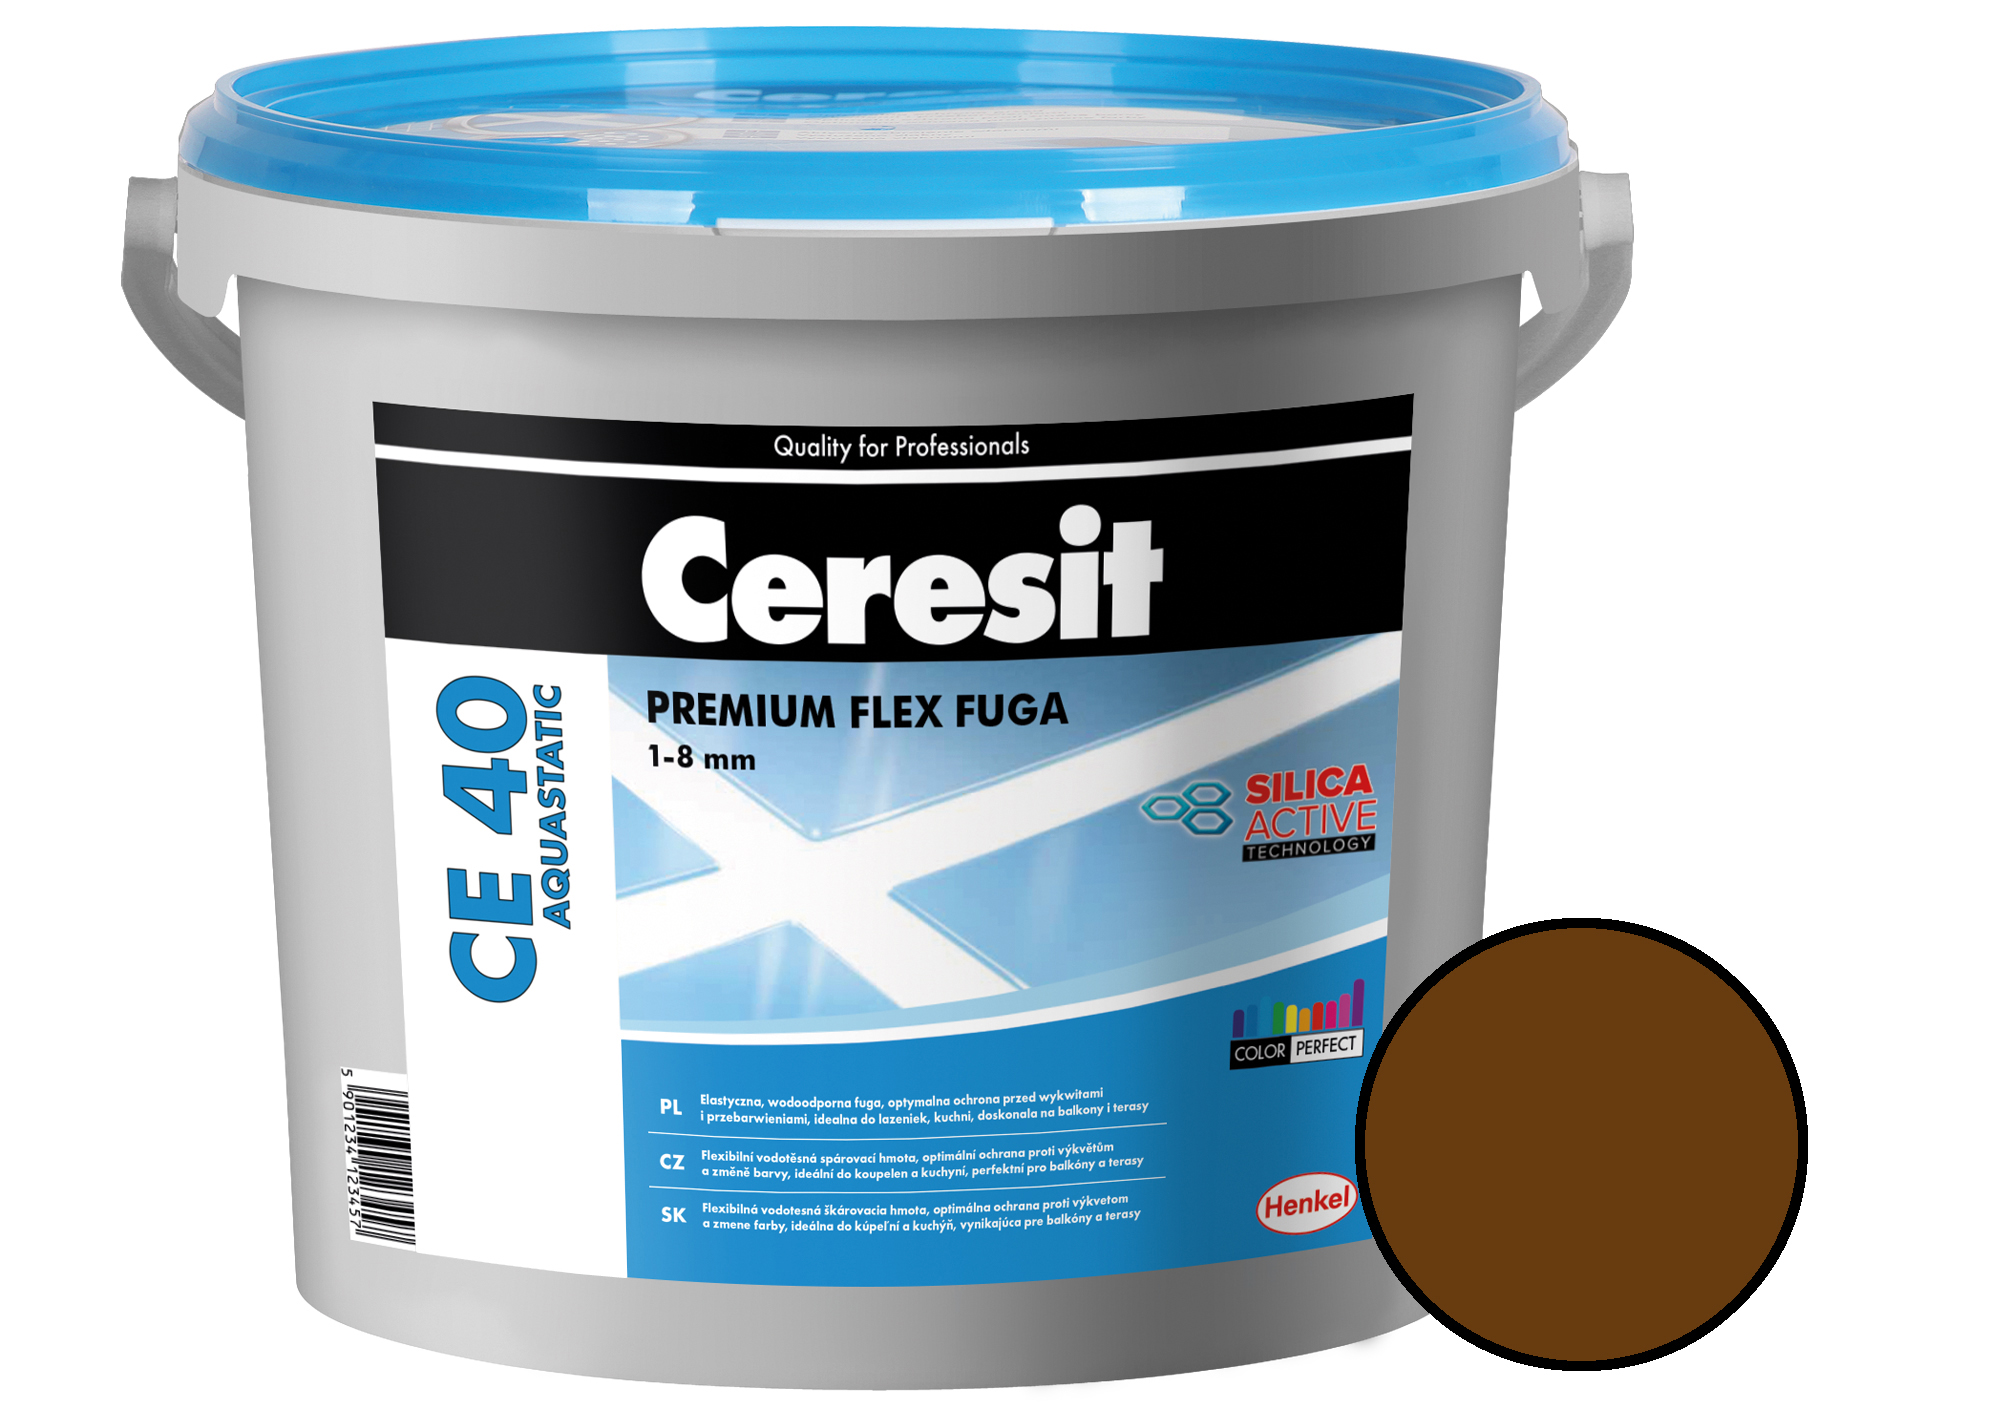 Hmota spárovací Ceresit CE 40 Aquastatic chocolate 2 kg